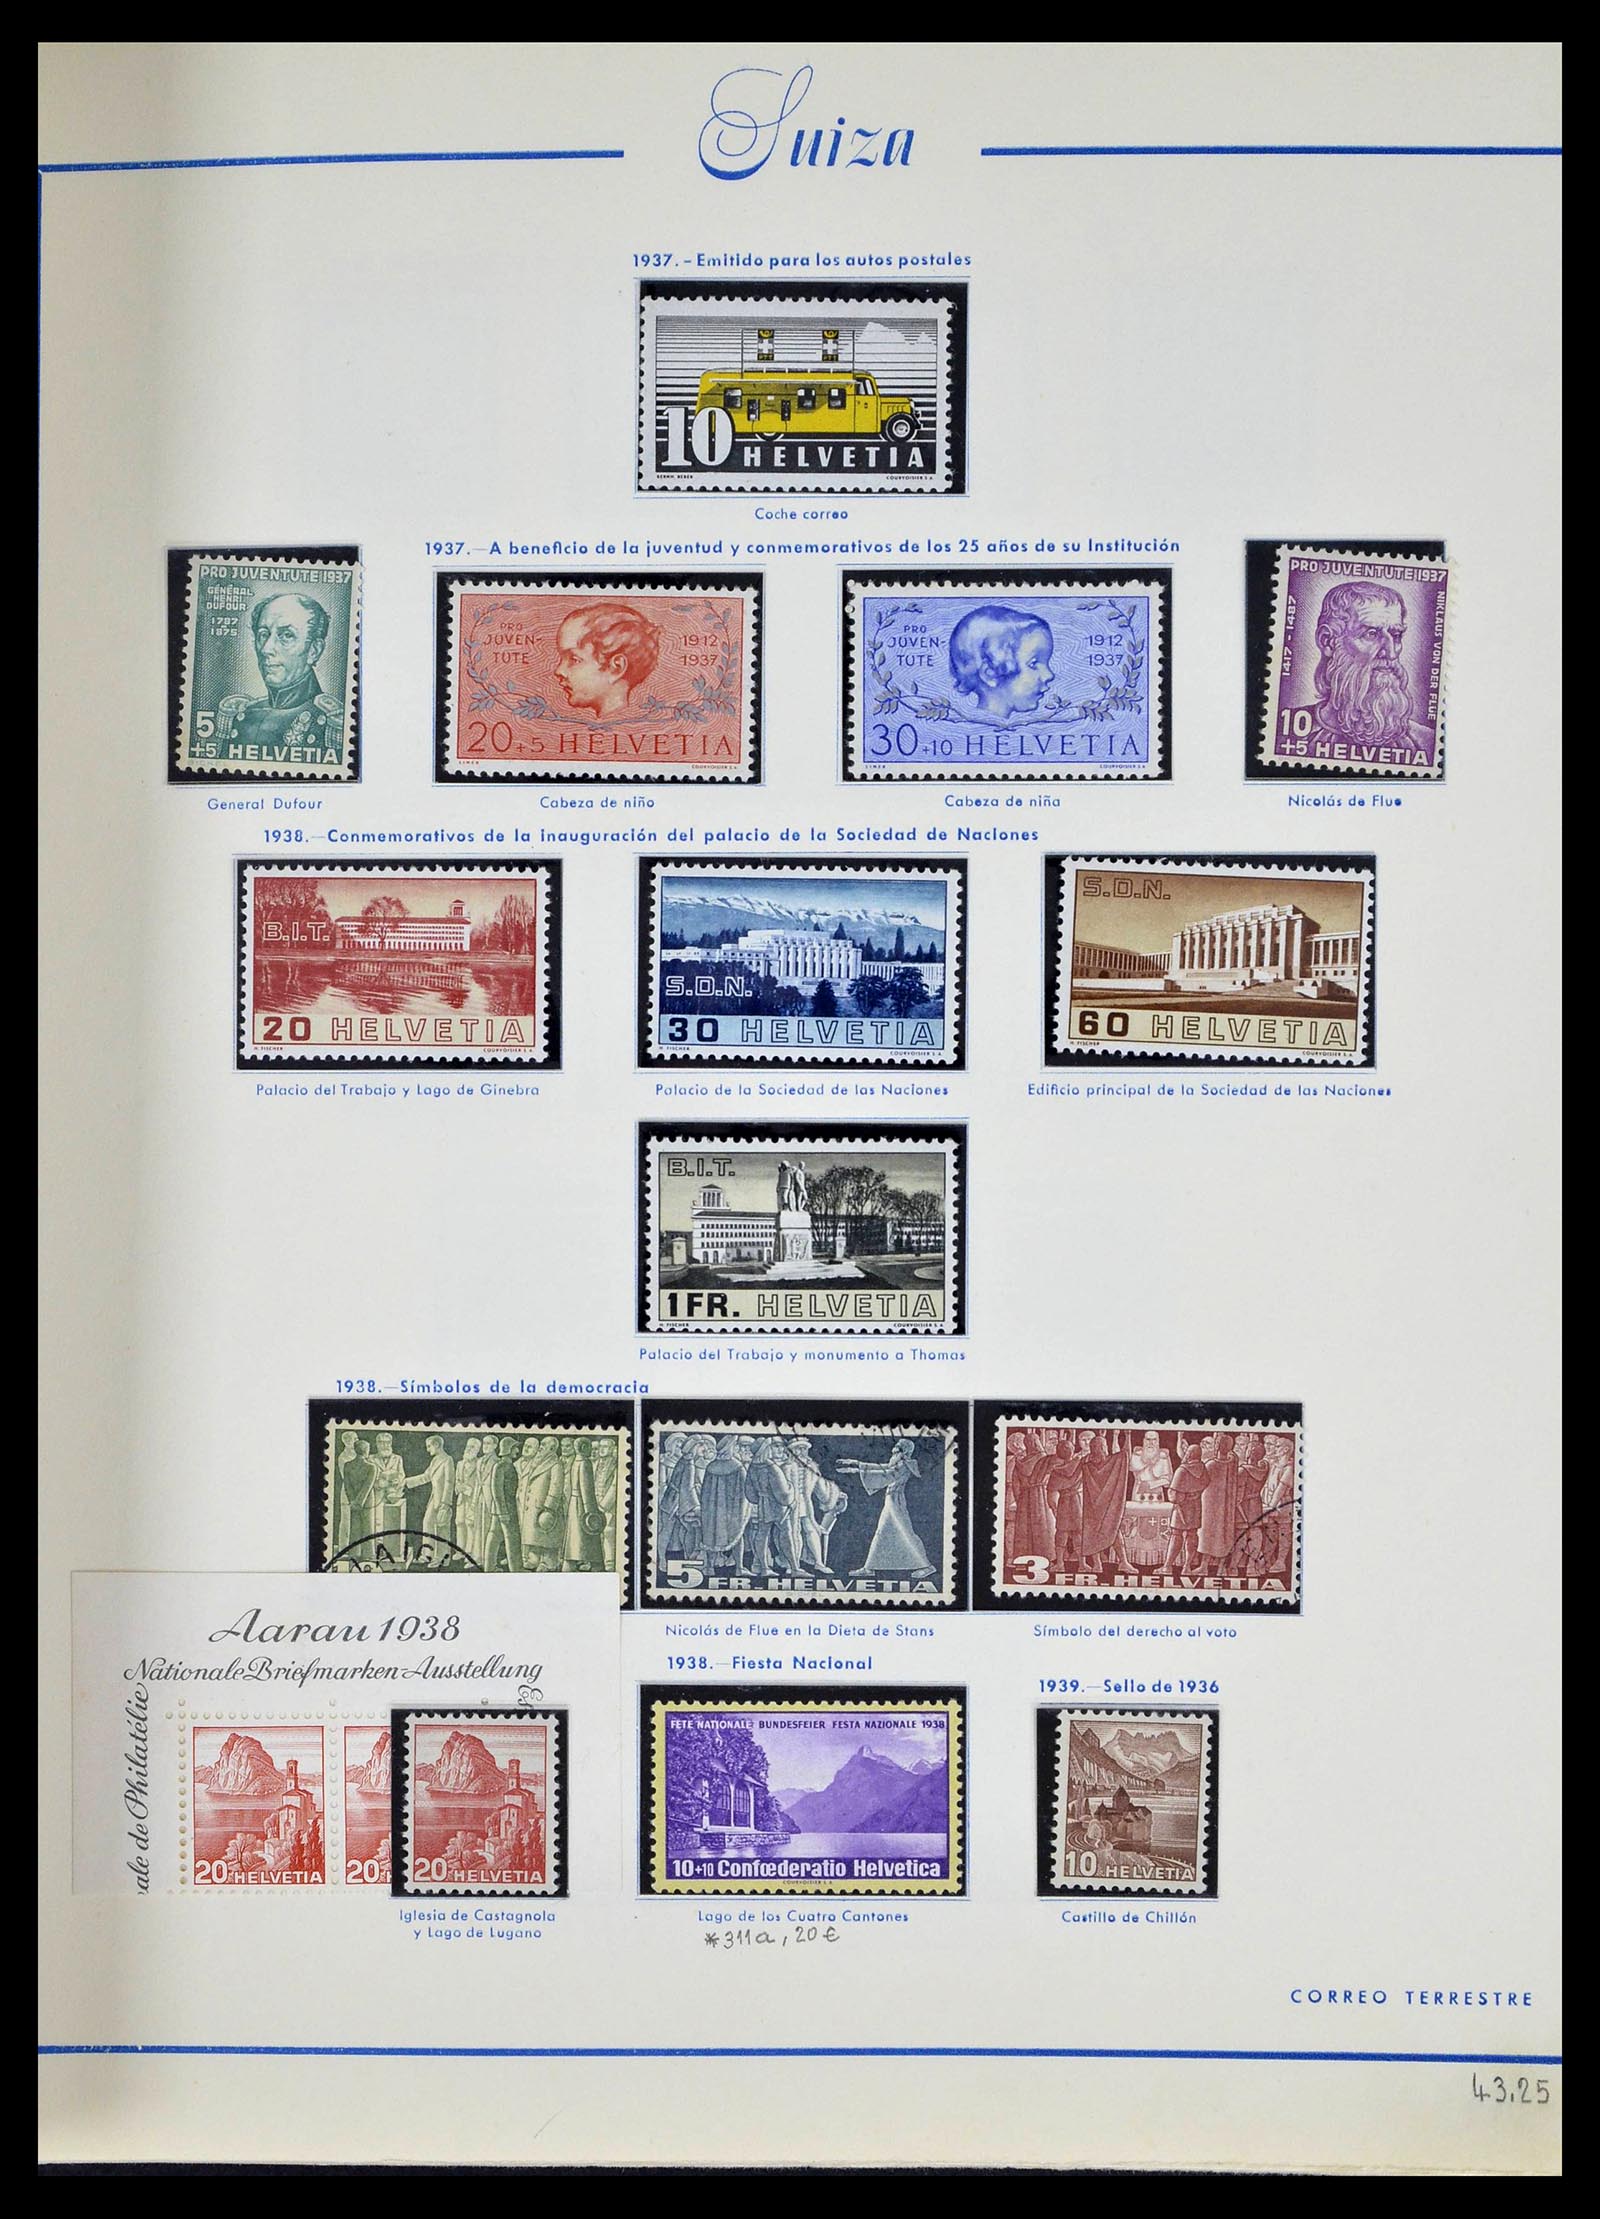 39217 0019 - Stamp collection 39217 Switzerland 1850-1986.